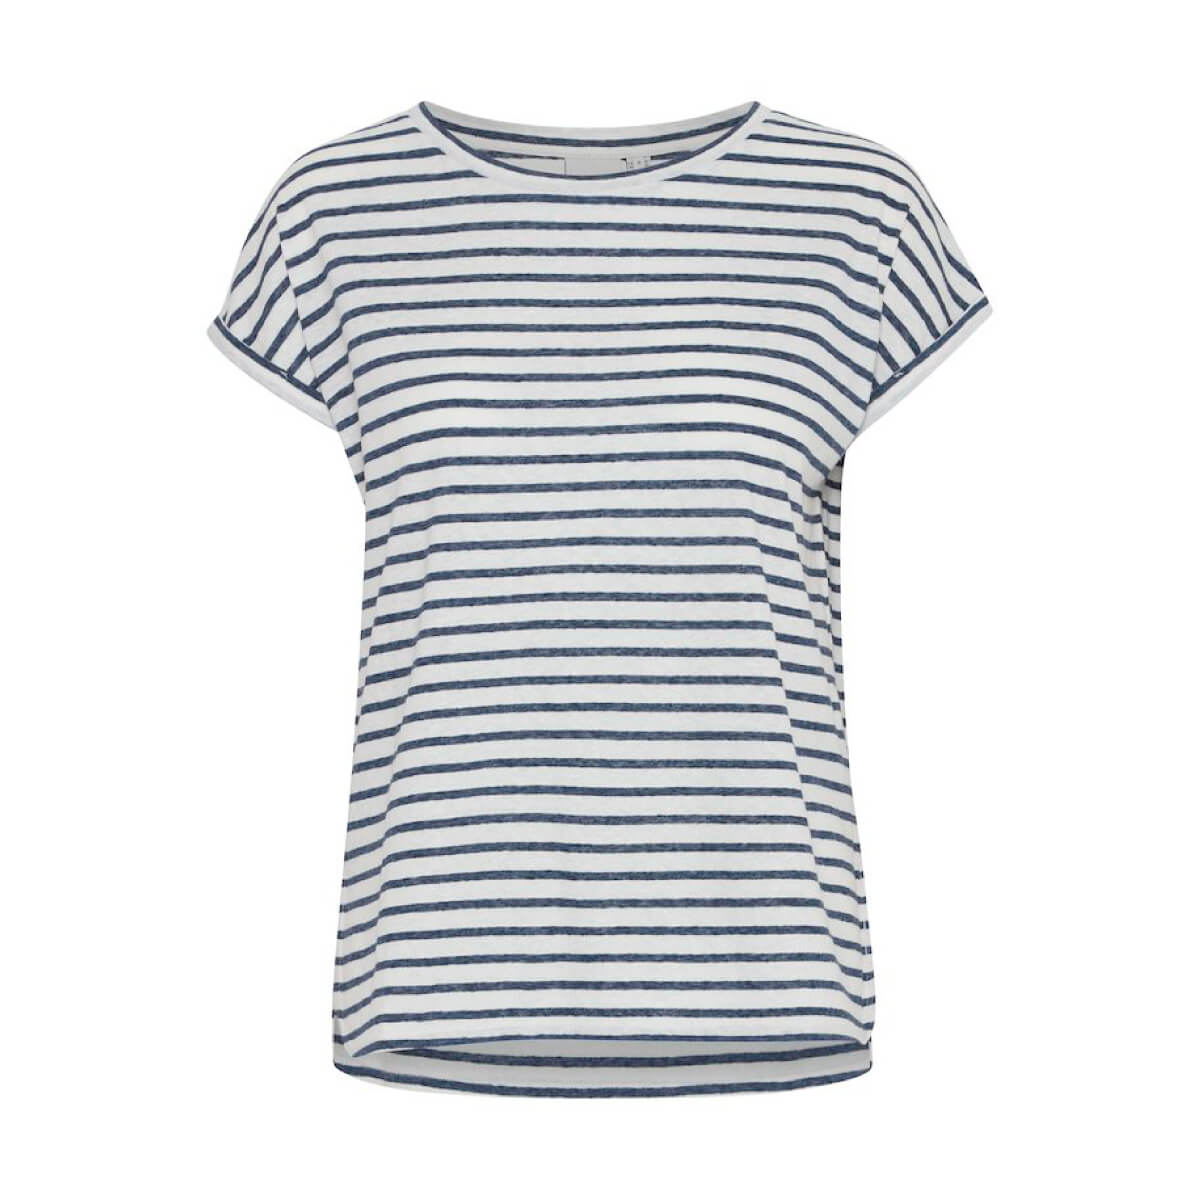 Striped Cap Sleeve T-Shirt black front | MILK MONEY milkmoney.co | cute tops for women. trendy tops for women. cute blouses for women. stylish tops for women. pretty womens tops.